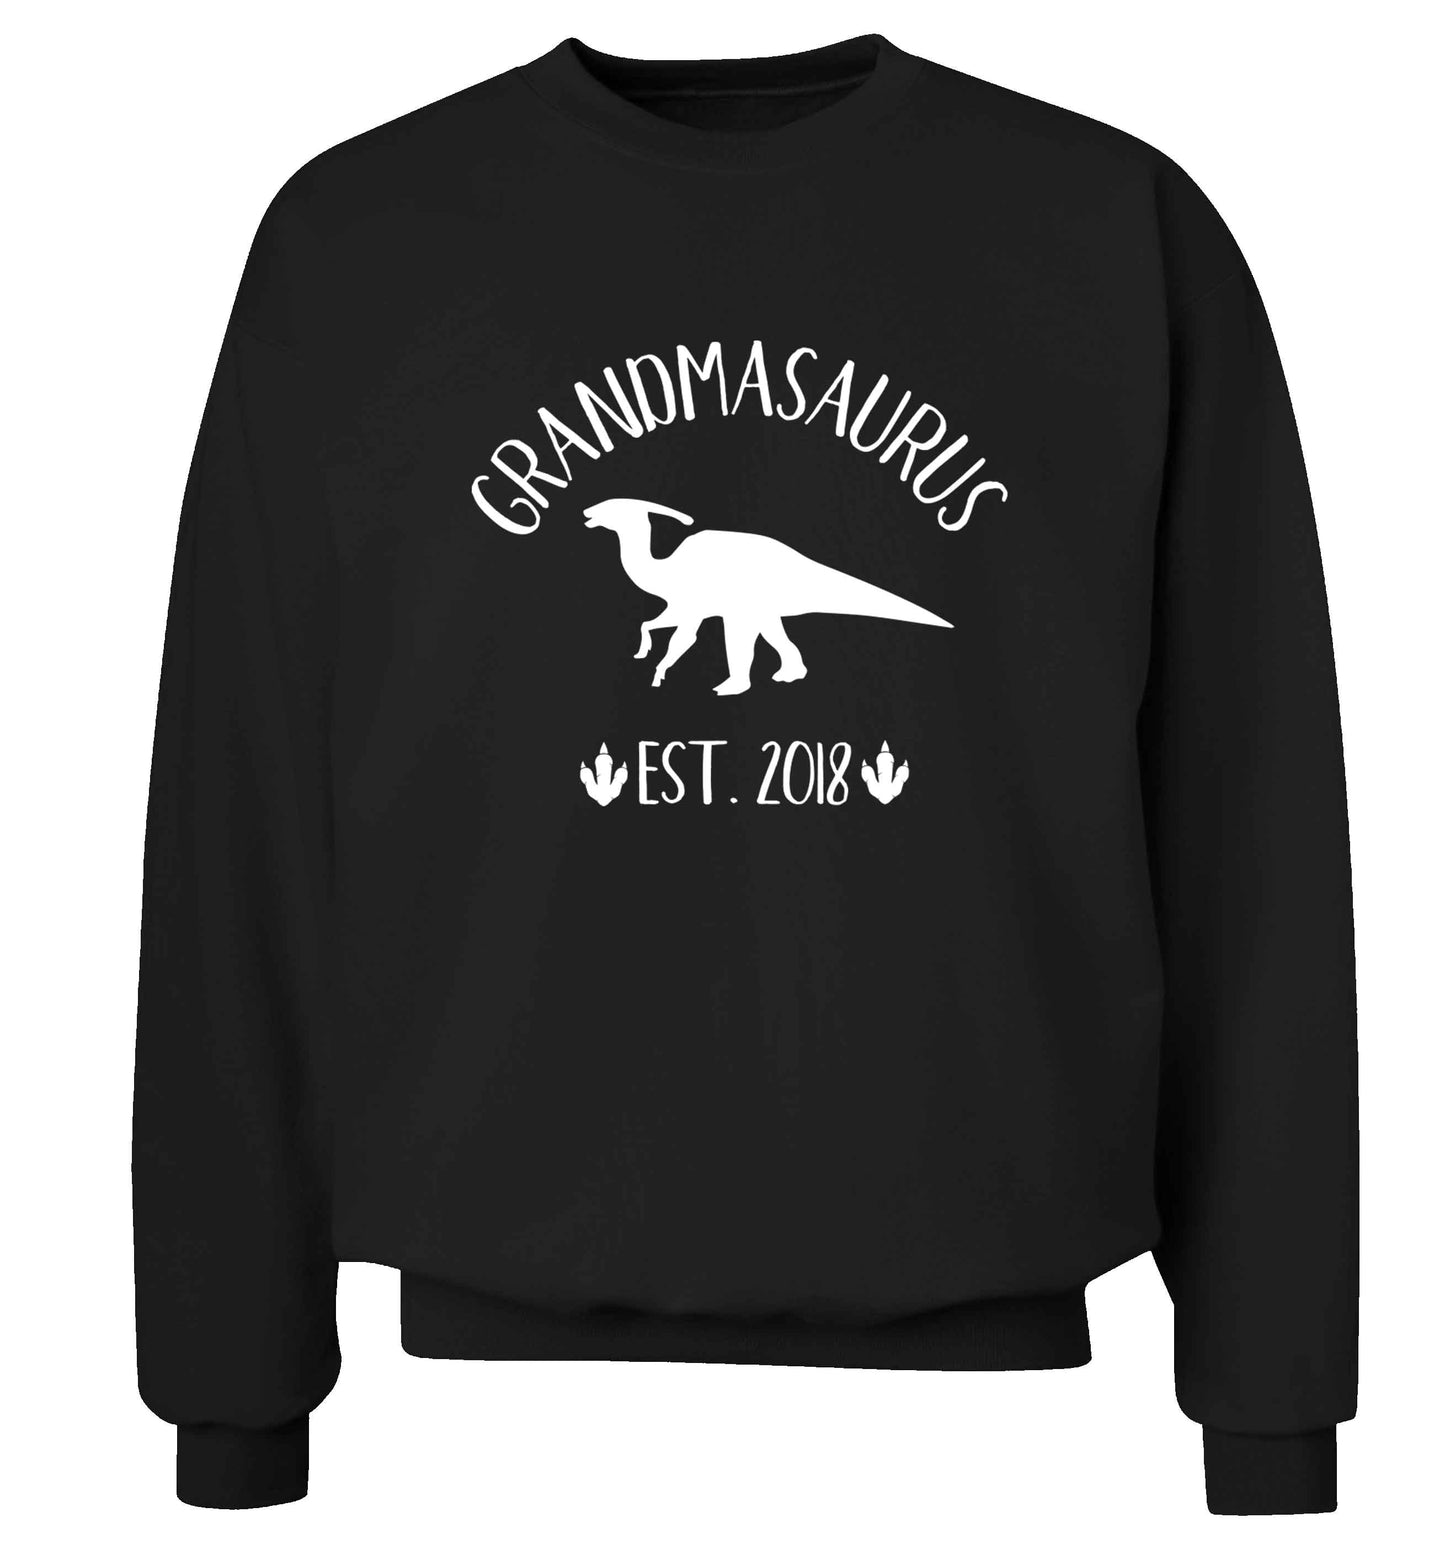 Personalised grandmasaurus since (custom date) Adult's unisex black Sweater 2XL